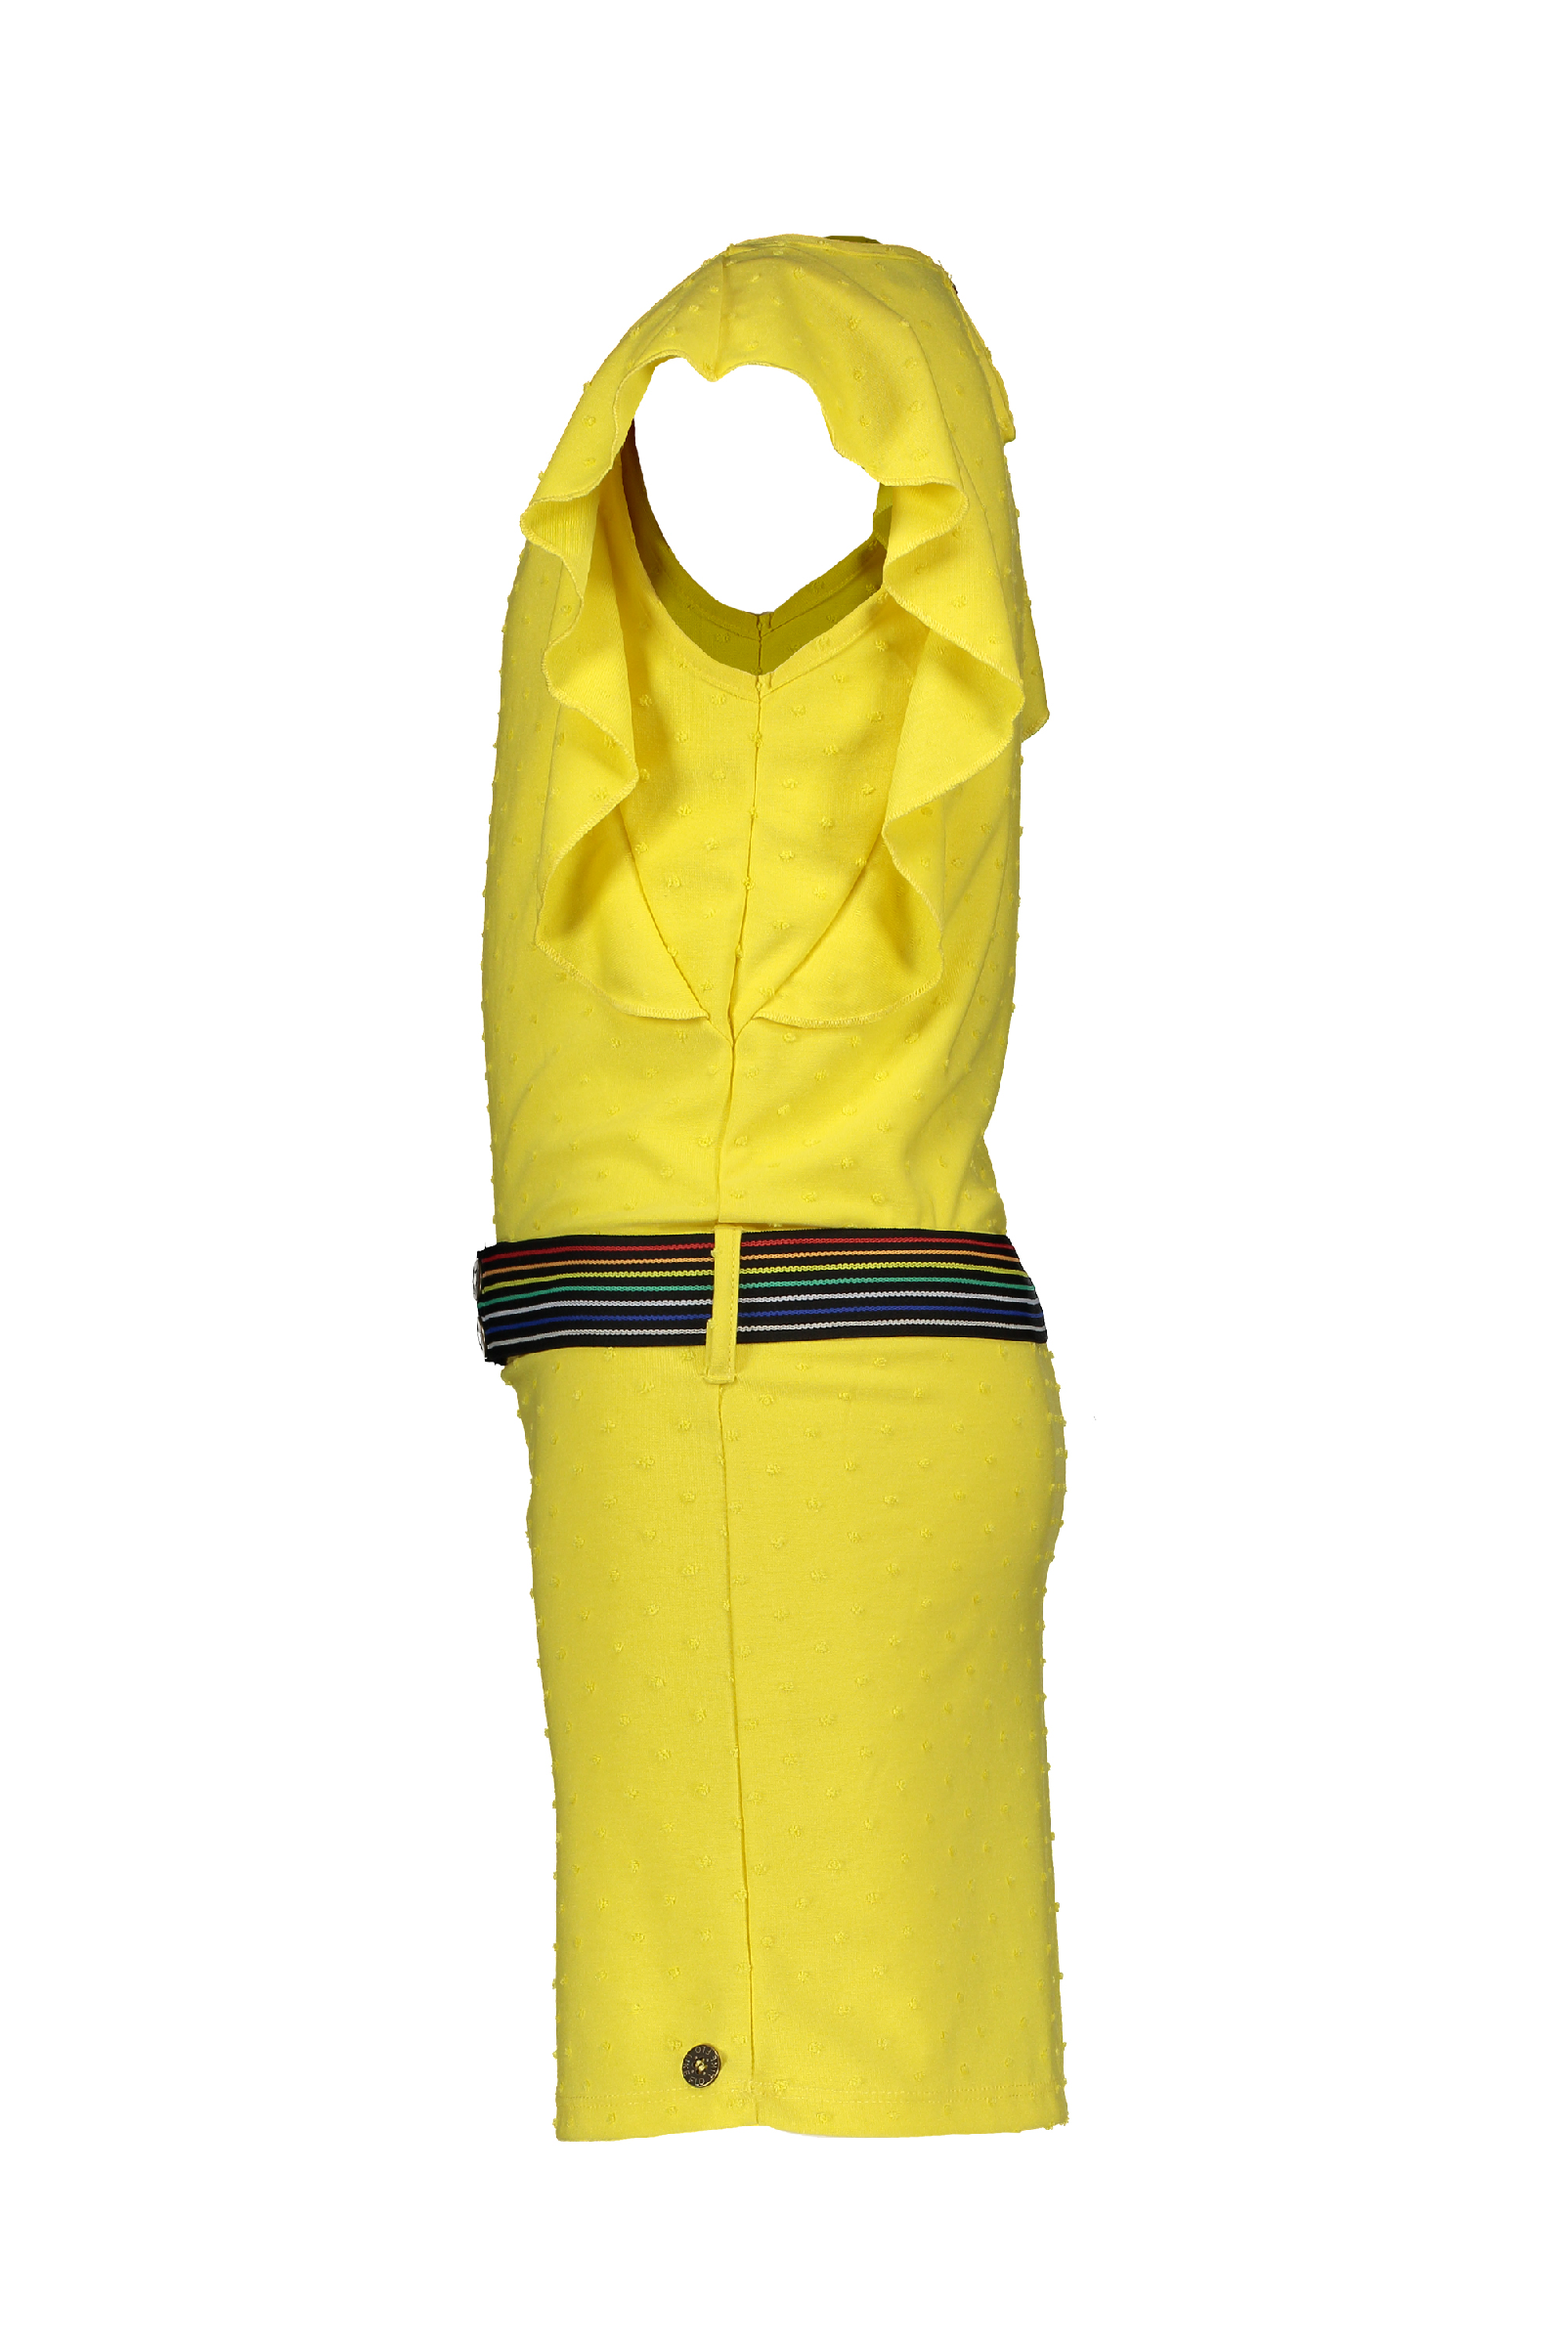 Meisjes Flo girls viscose dot ruffle dress loose belt van Flo in de kleur Yellow in maat 152.